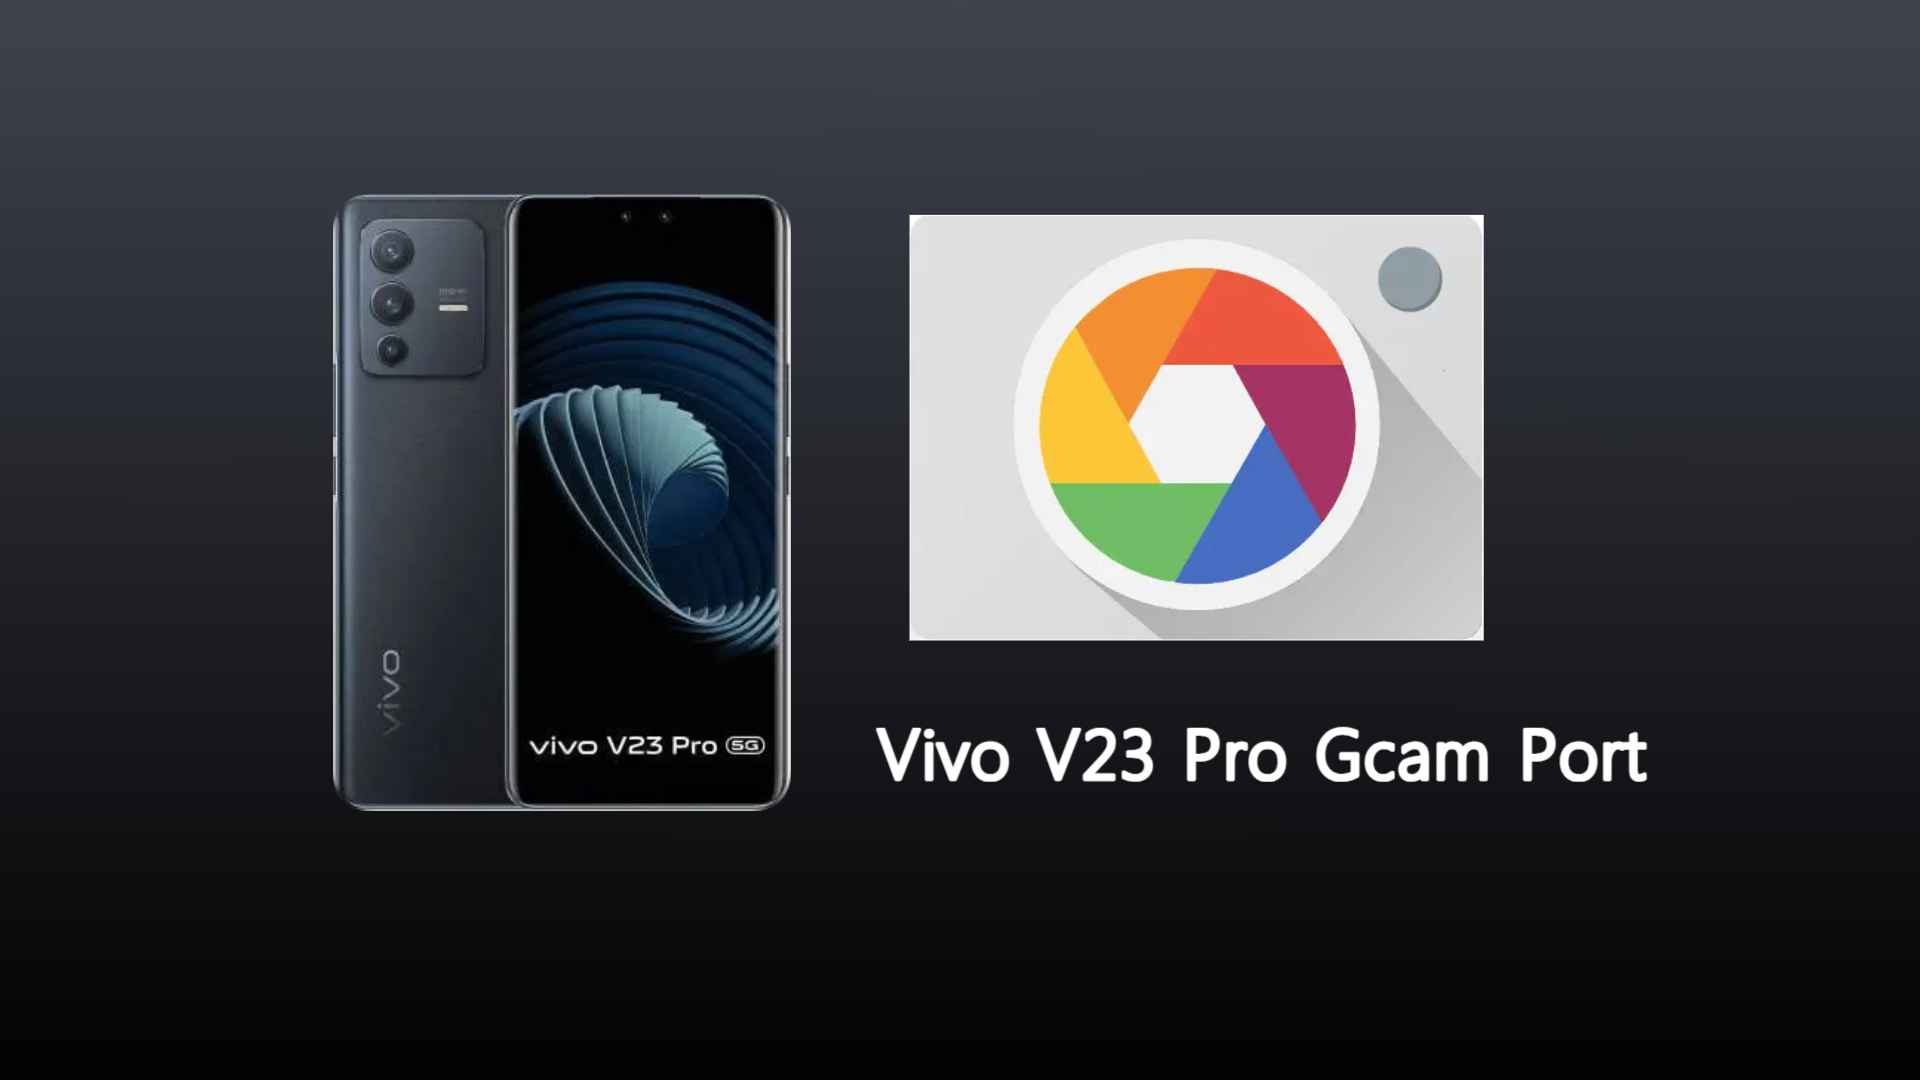 Vivo V23 Pro Gcam Port